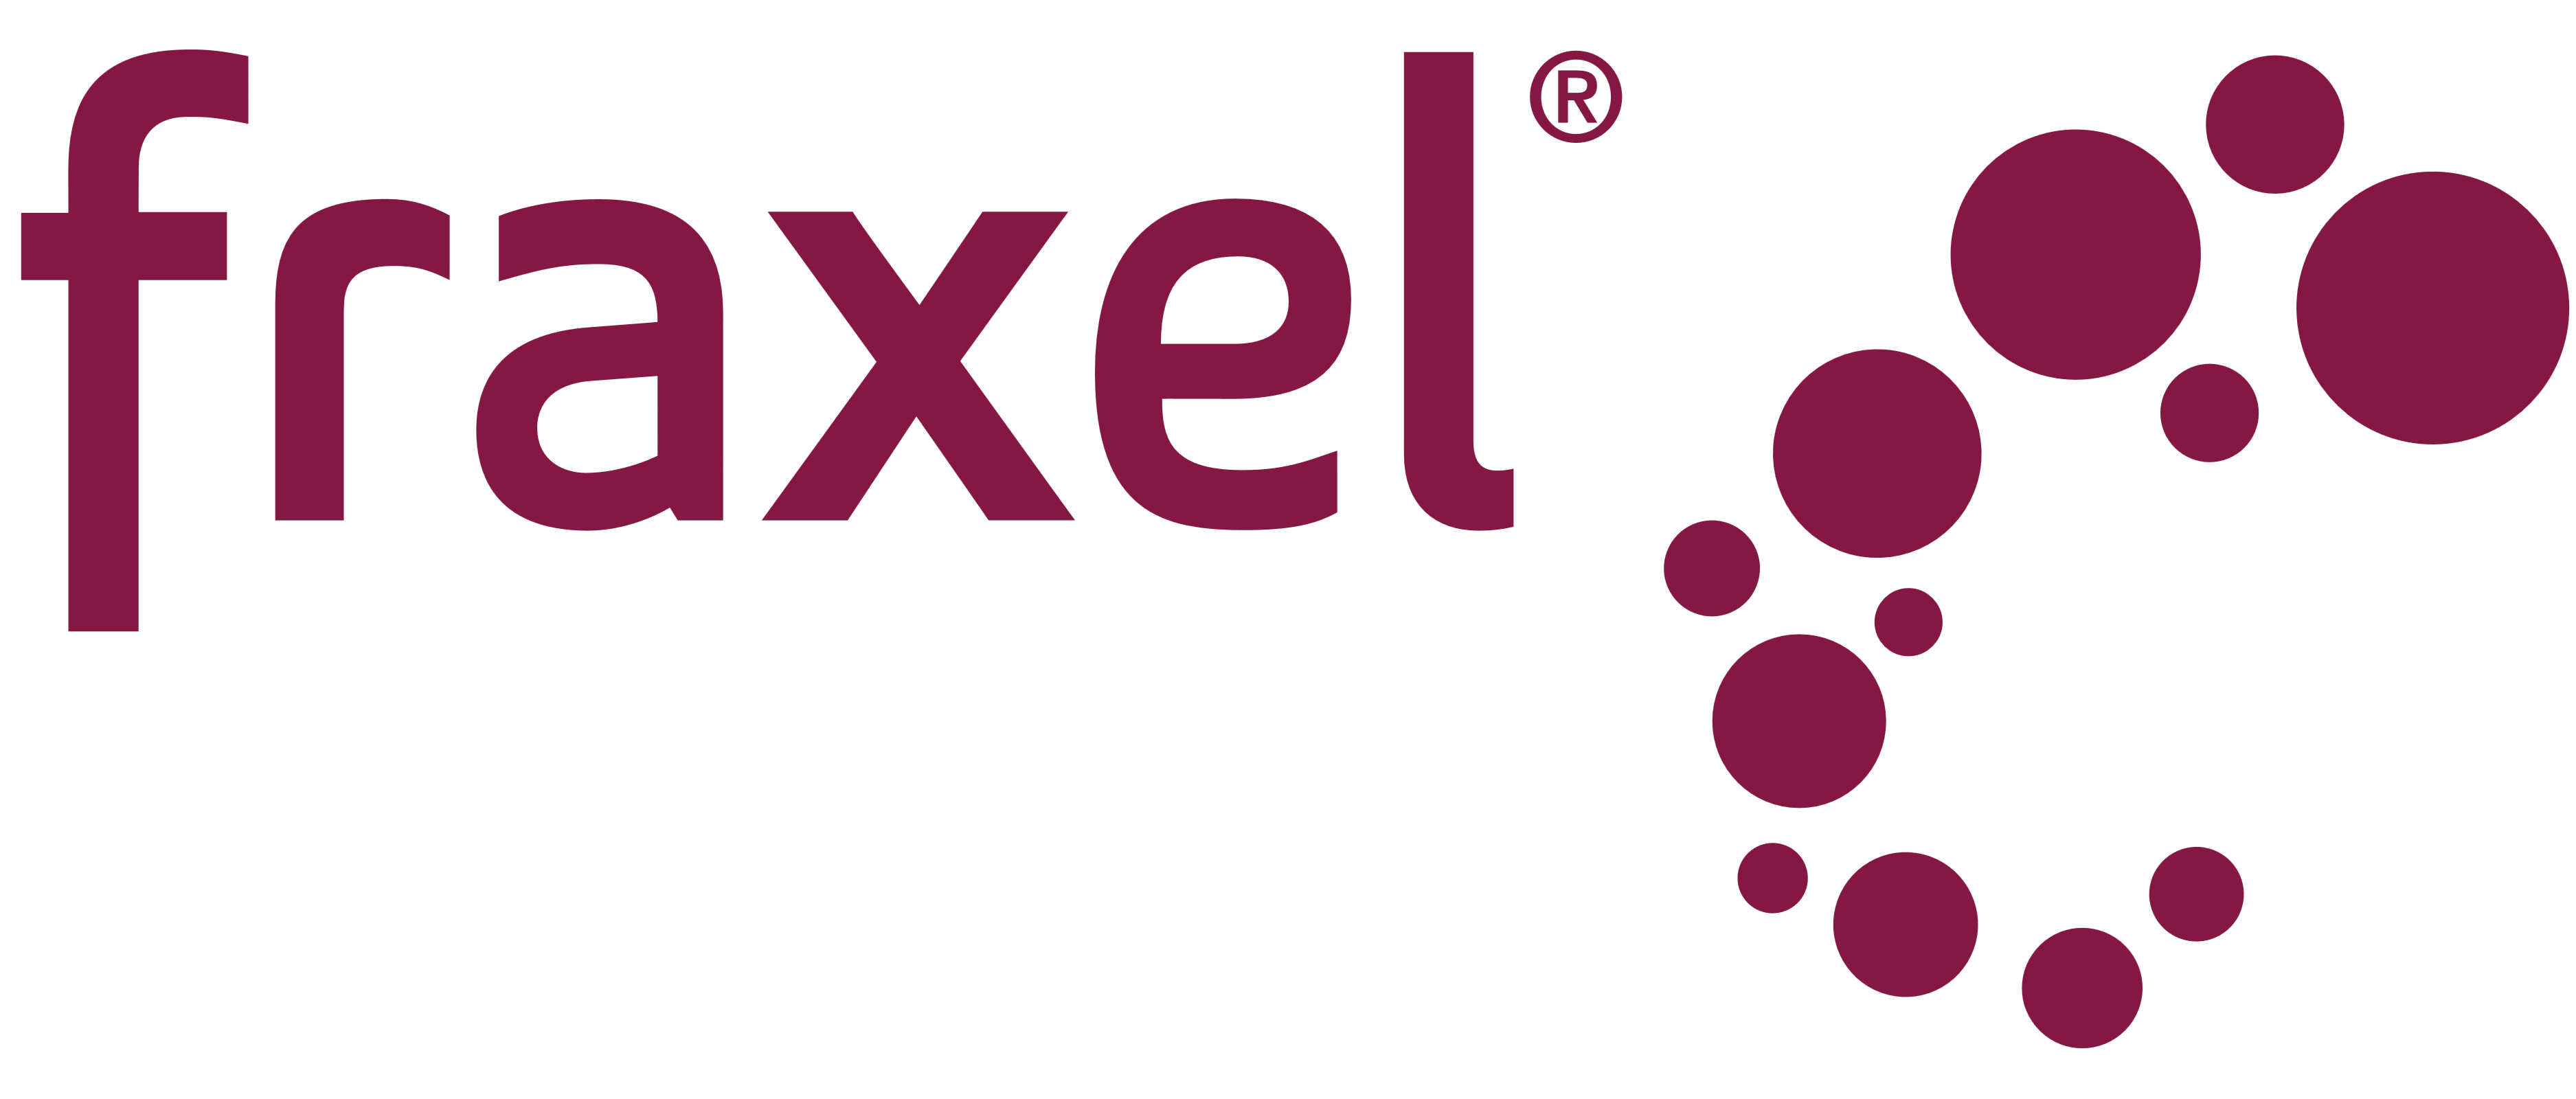 Fraxel logo, logotype